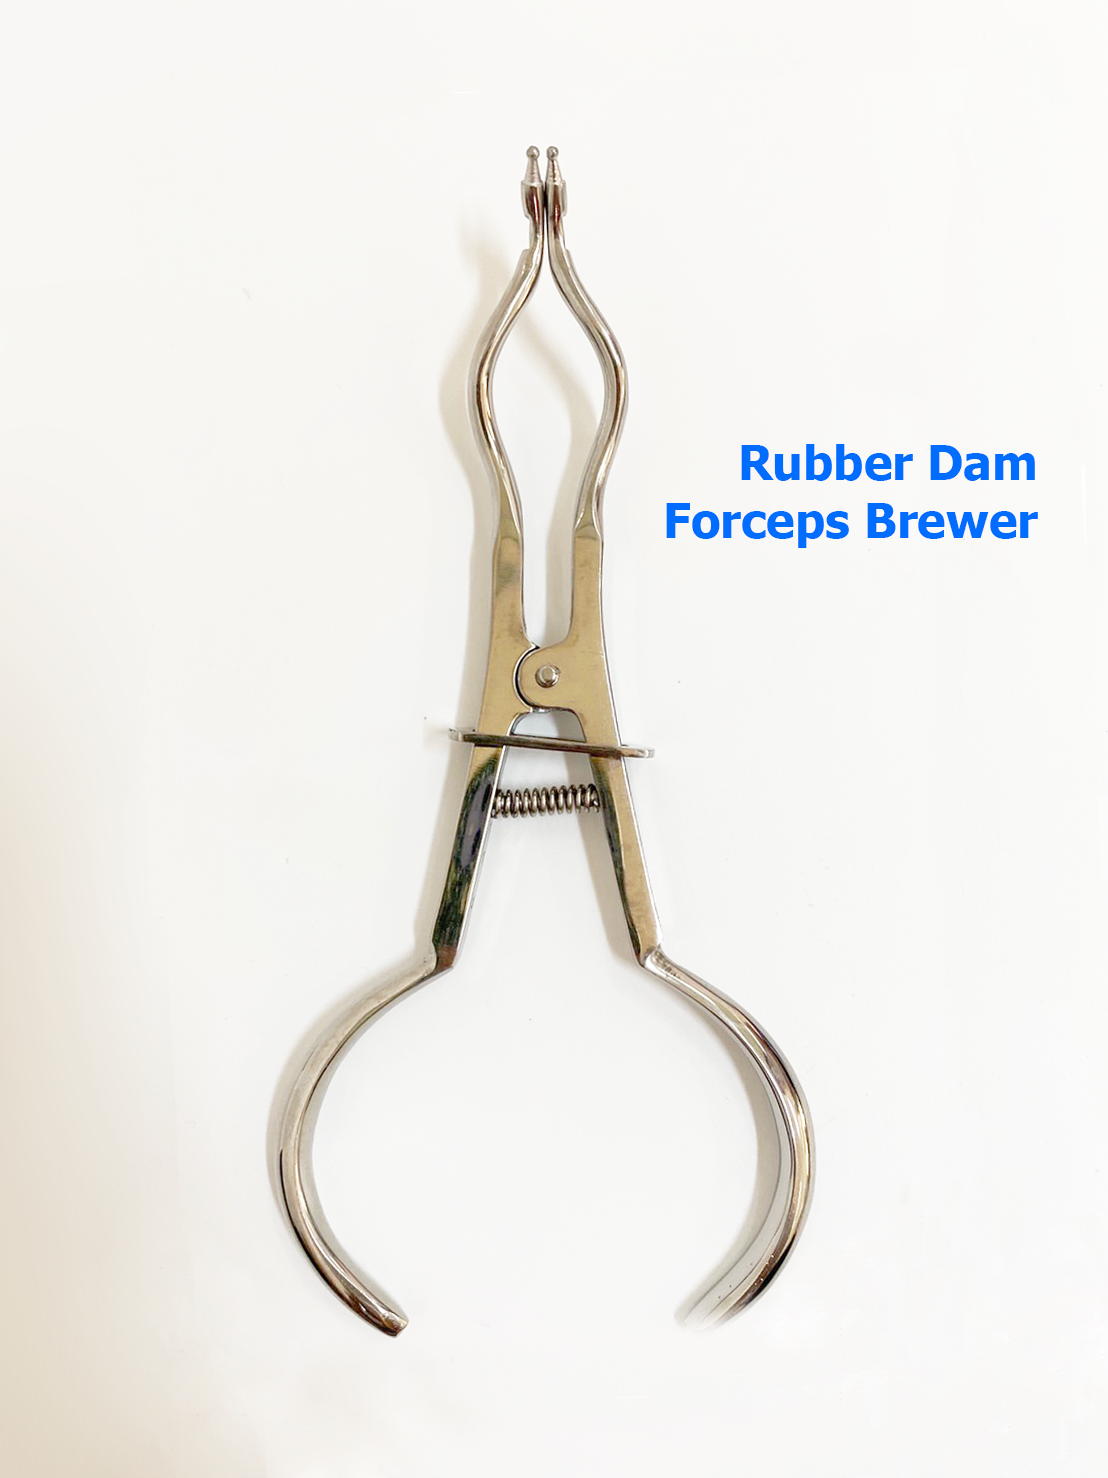 Rubber Dam Forceps: Brewer